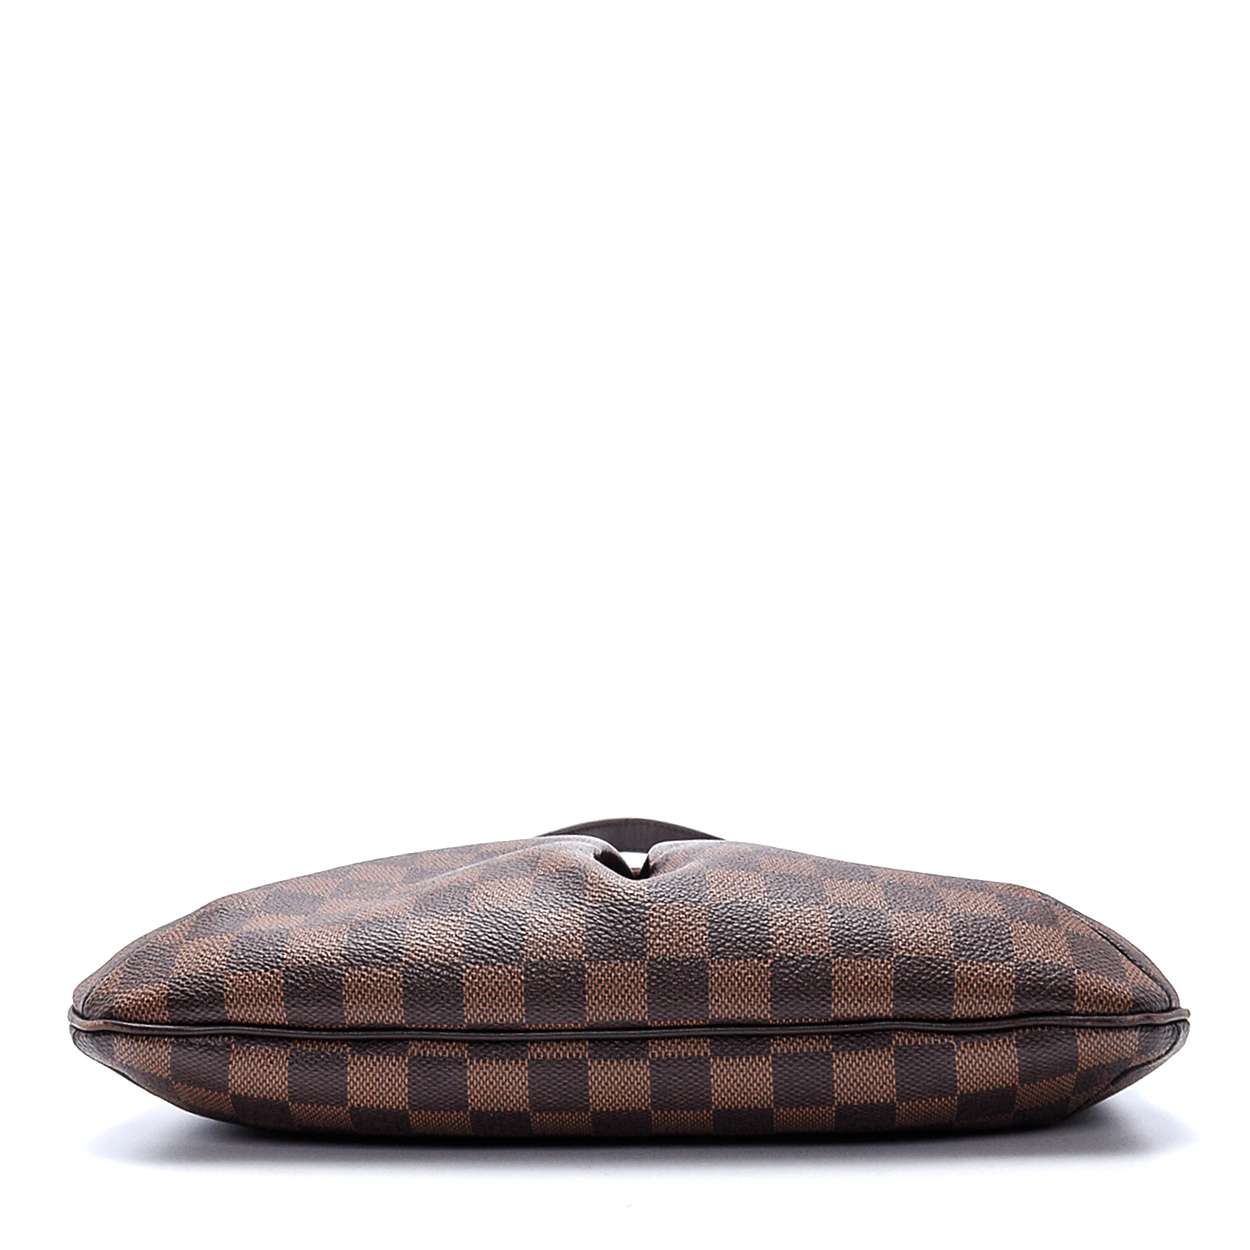 Louis Vuitton - Damier Ebene Canvas Leather Bloomsbury PM Messenger Bag